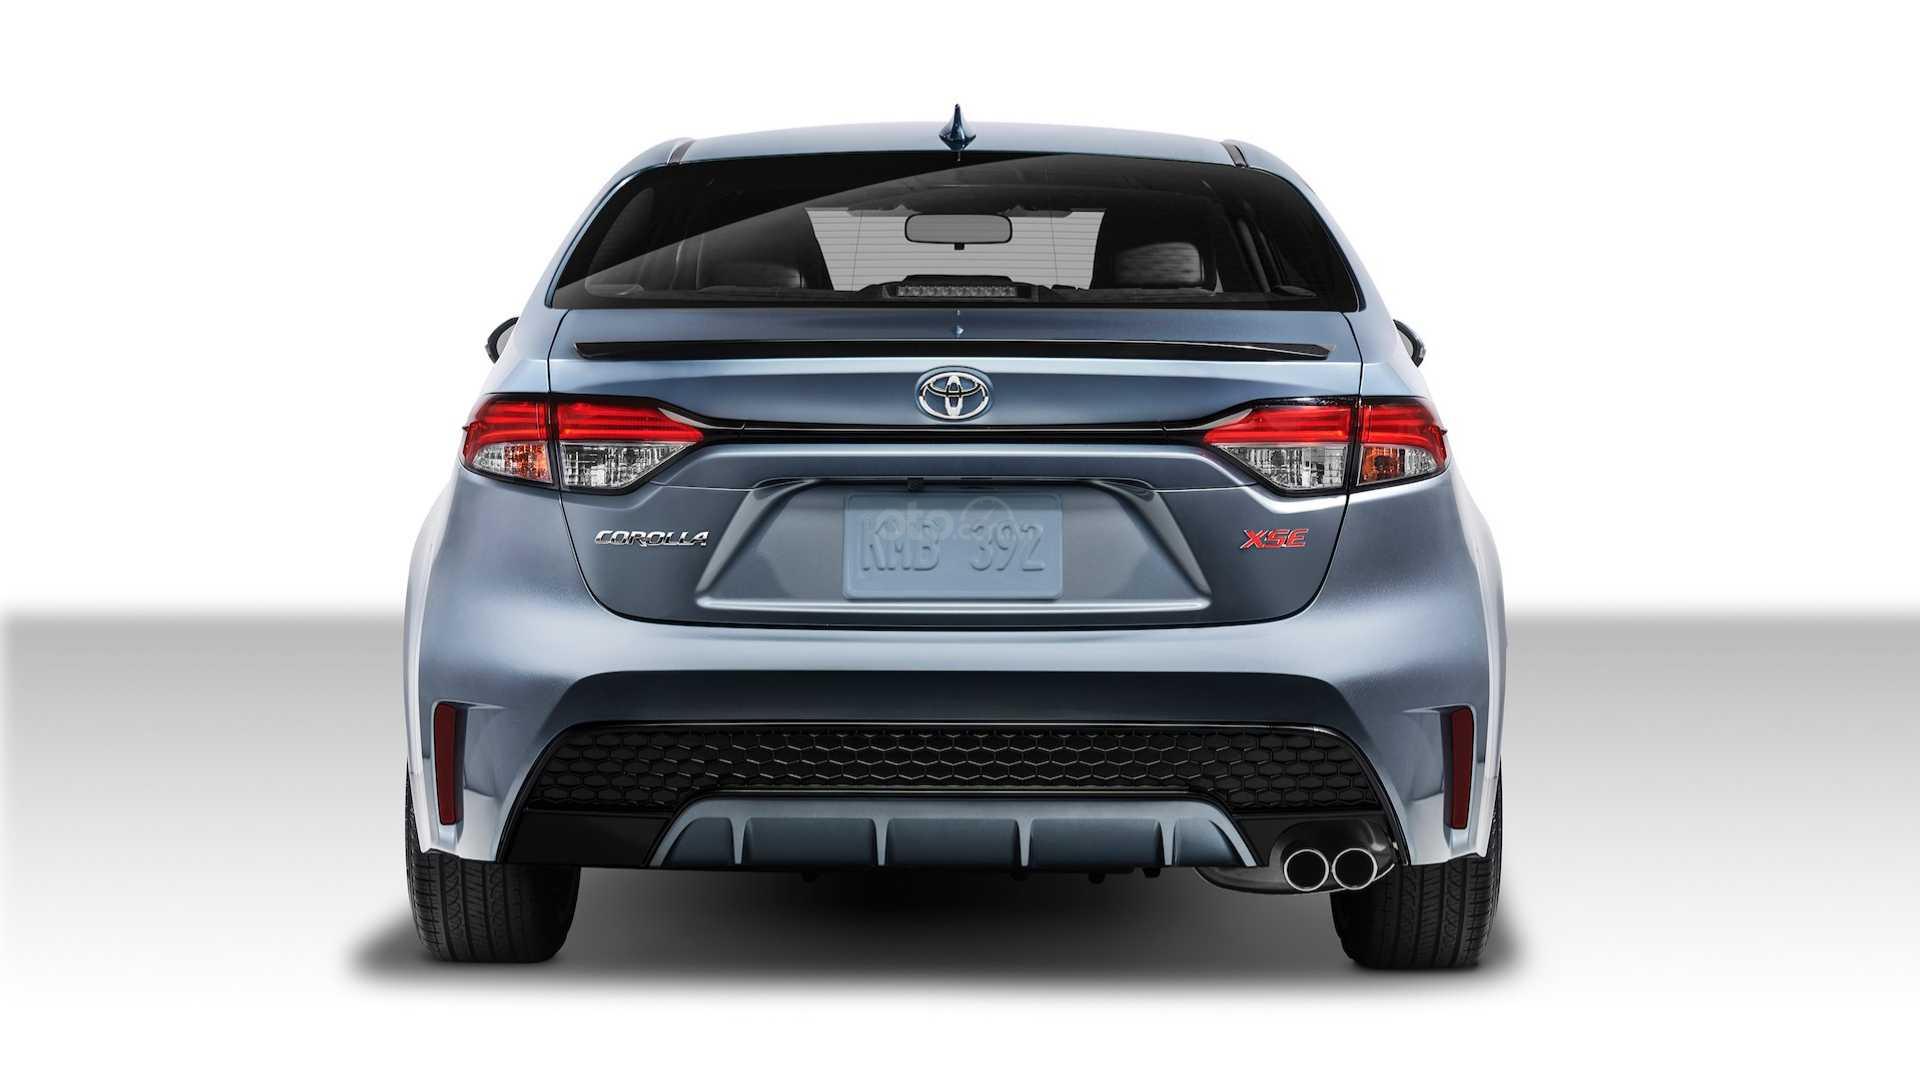 New Toyota Yaris Sedan First Look Walkaround  Exteriors Interiors